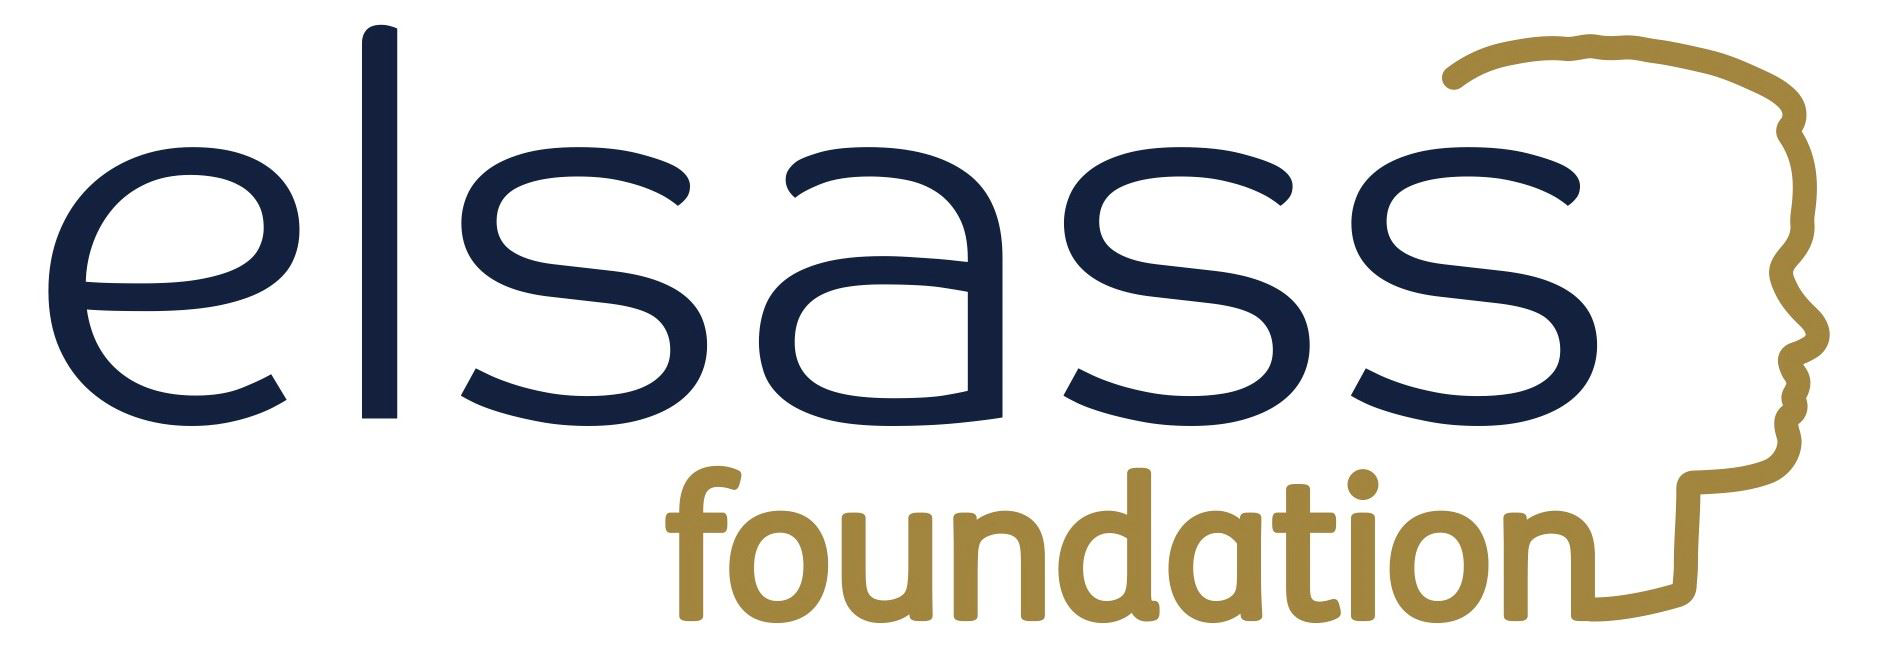 Elsass foundation logo